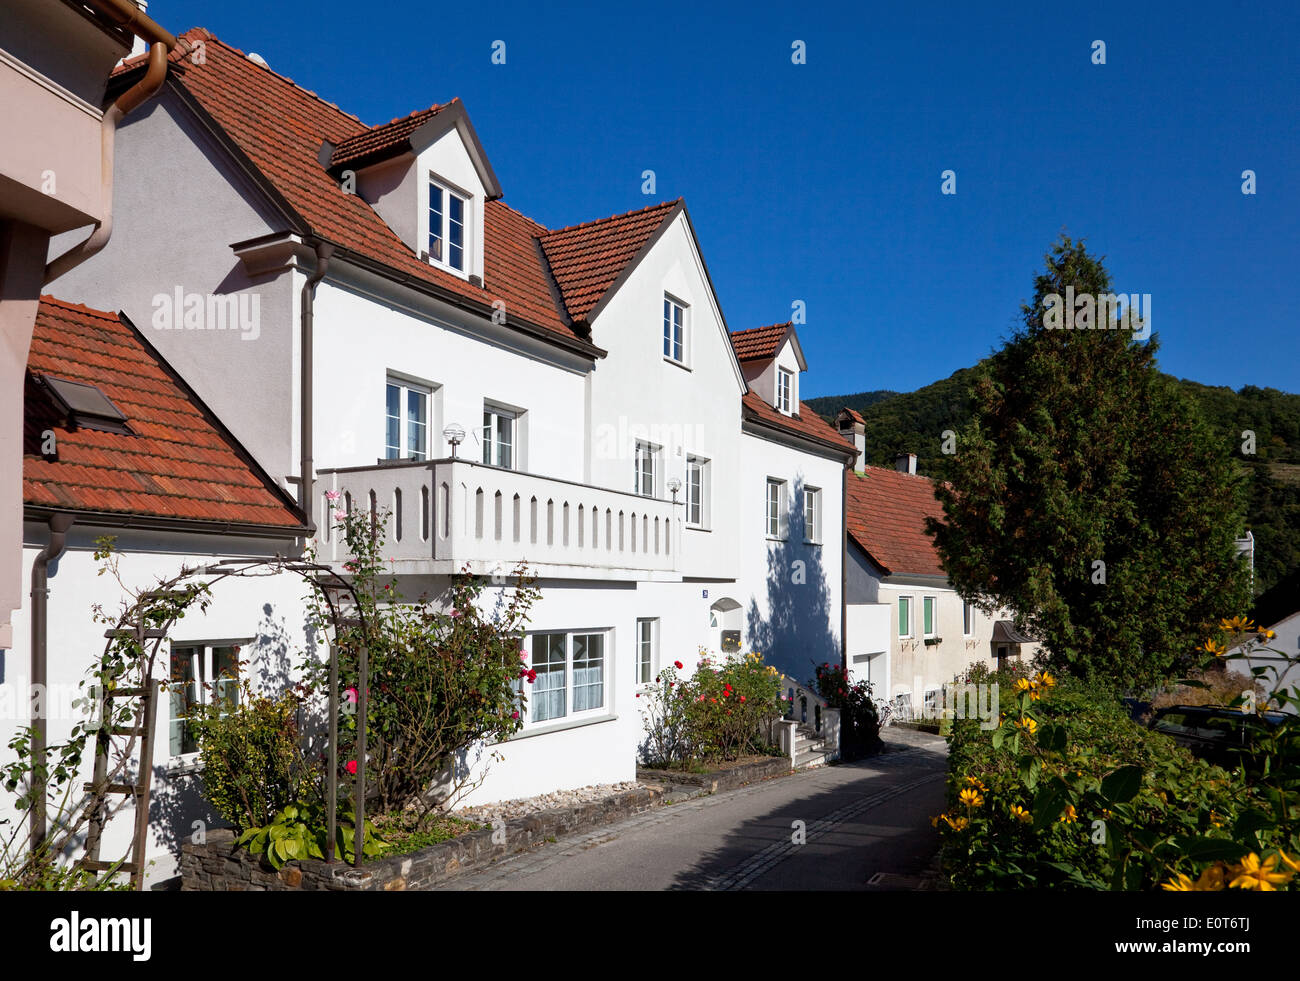 Buildings in Schwallenbach, Wachau region, Lower Austria, Austria Stock Photo